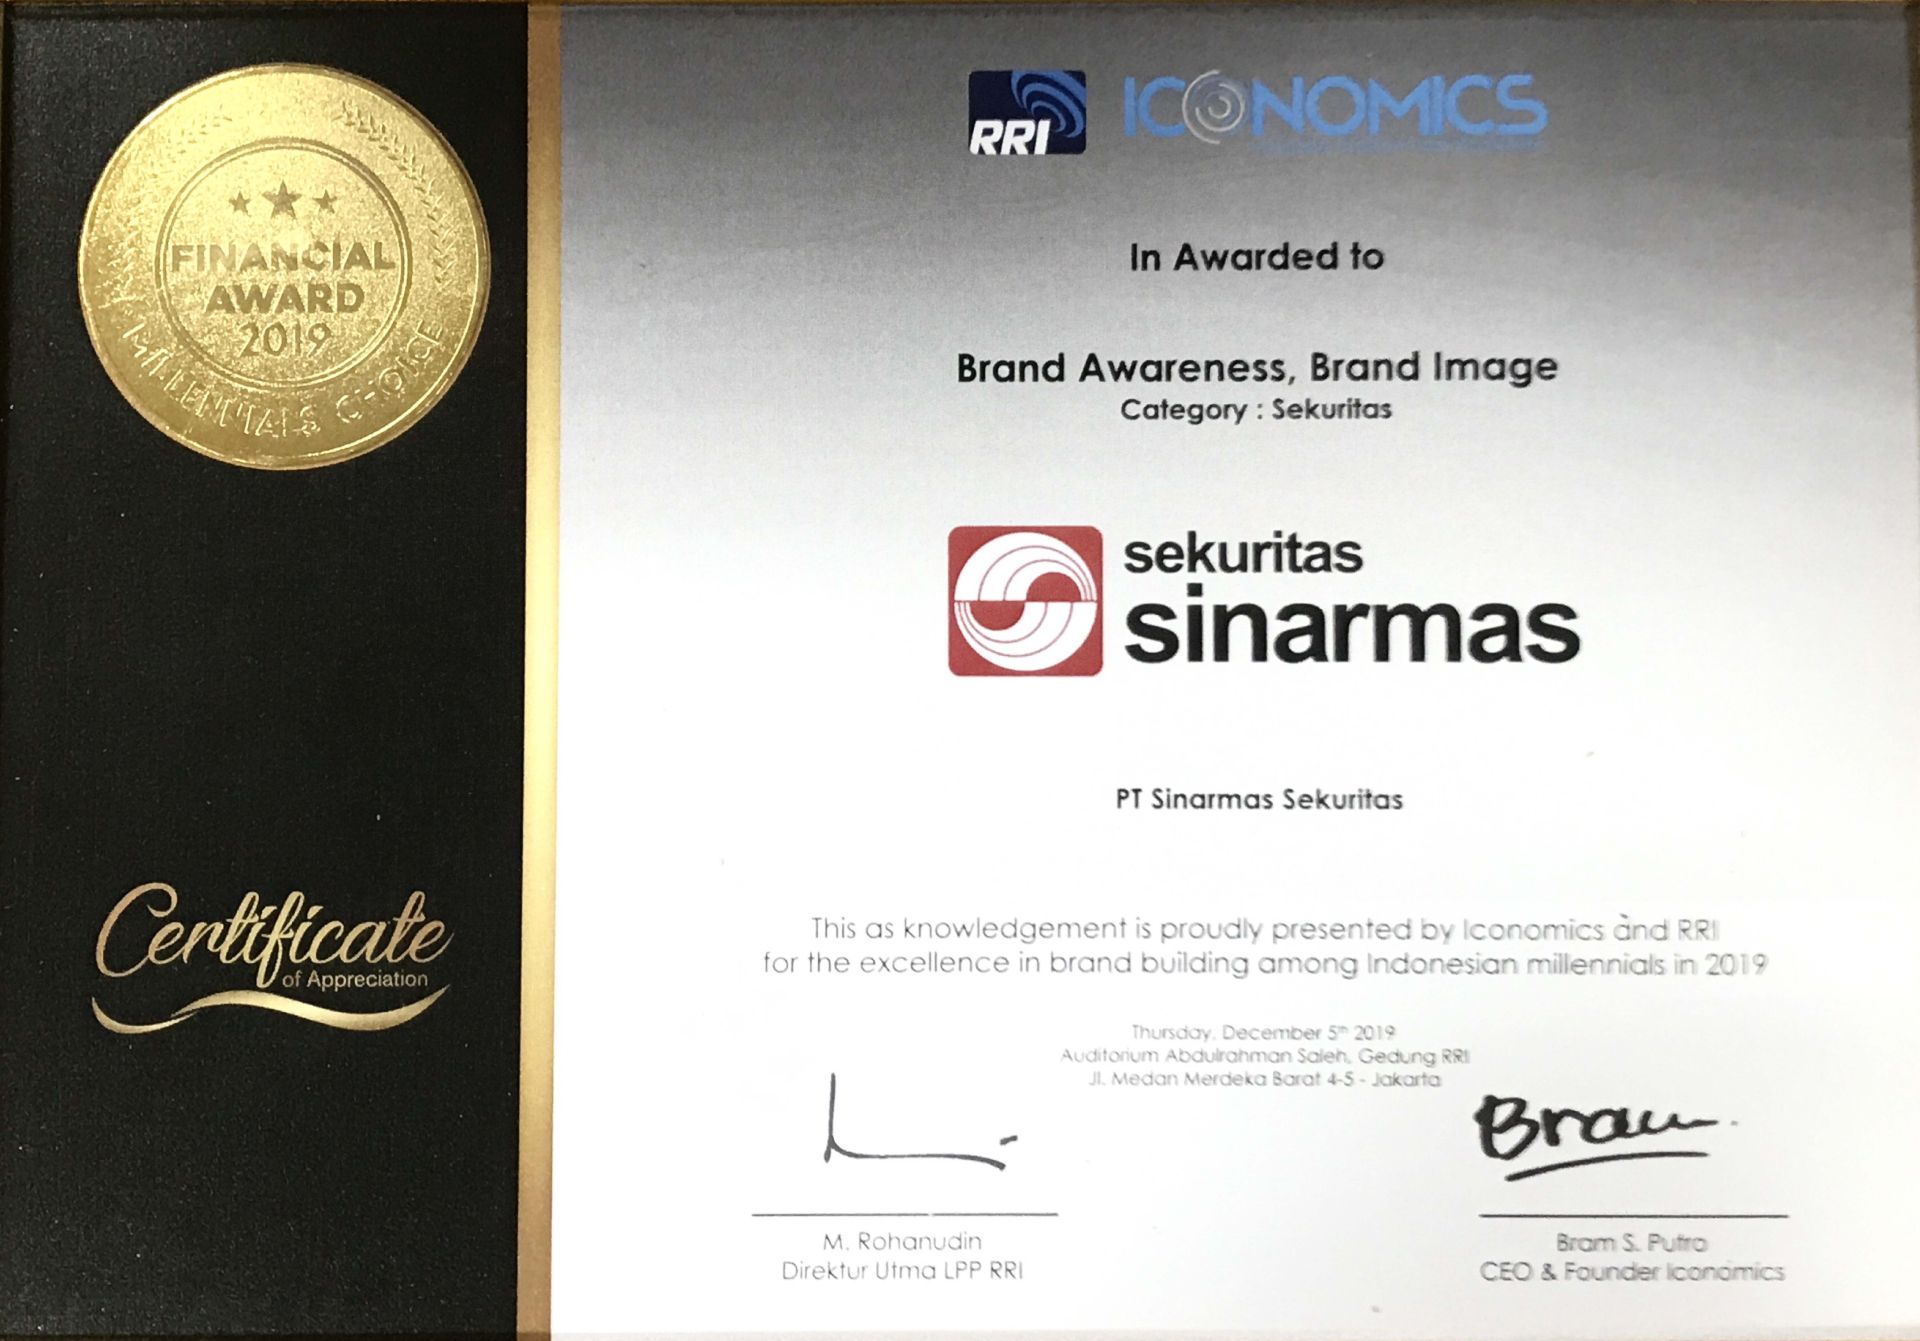 Iconomics : Financial Award 2019